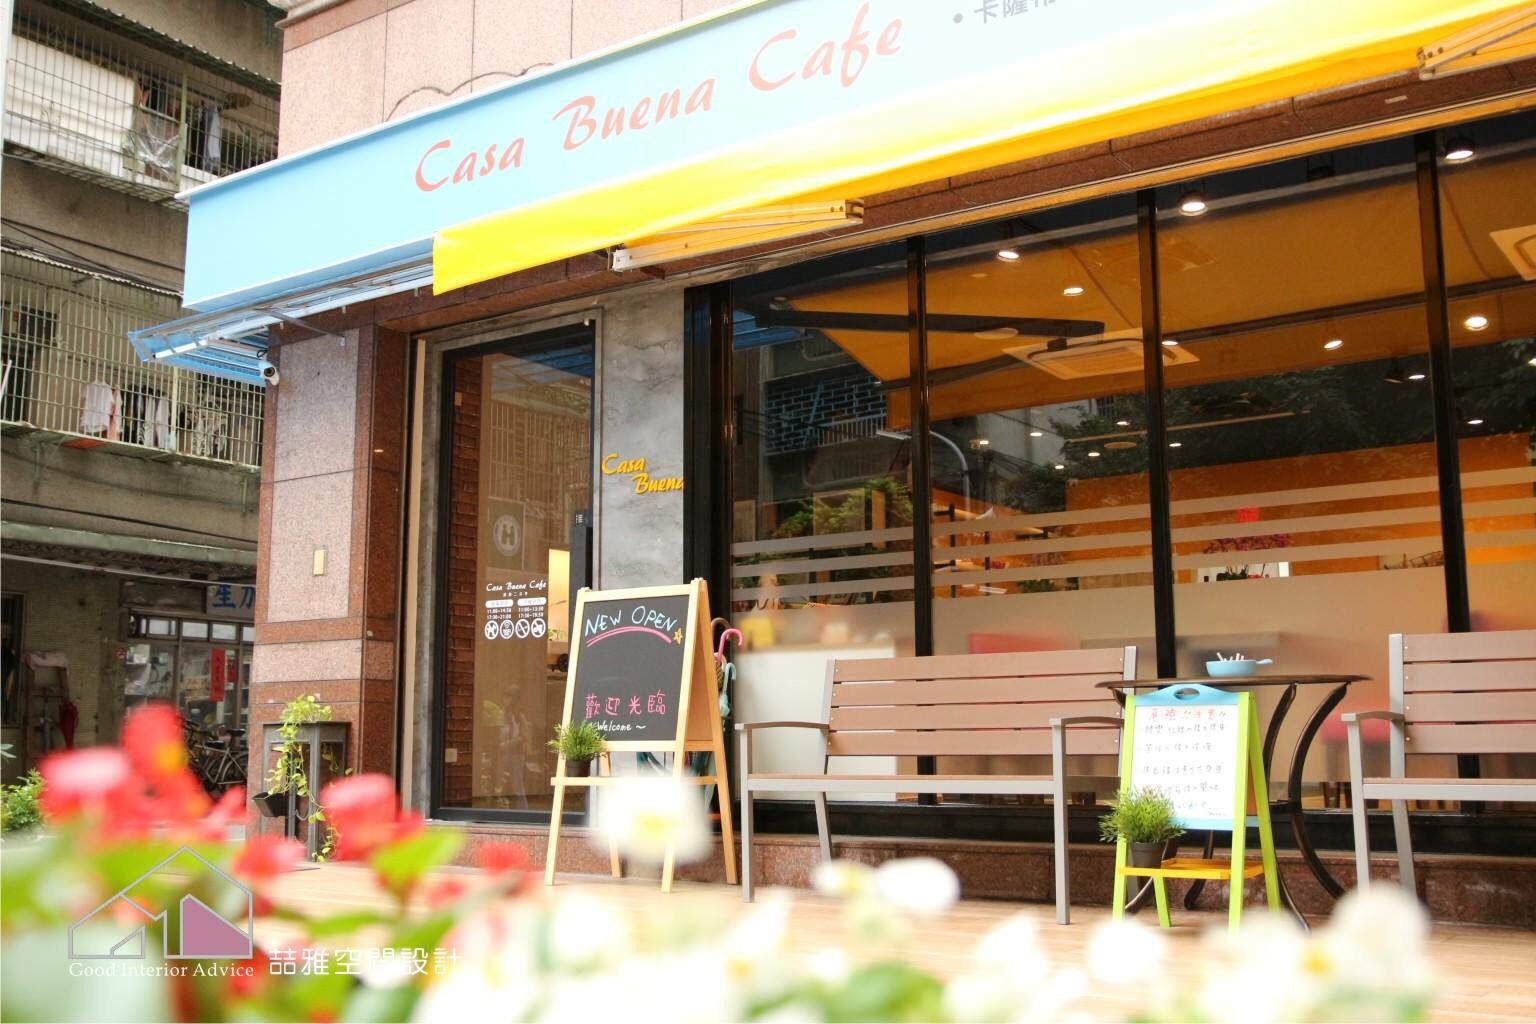 Casa Buena Cafe 卡薩布維納義式蔬食咖啡館